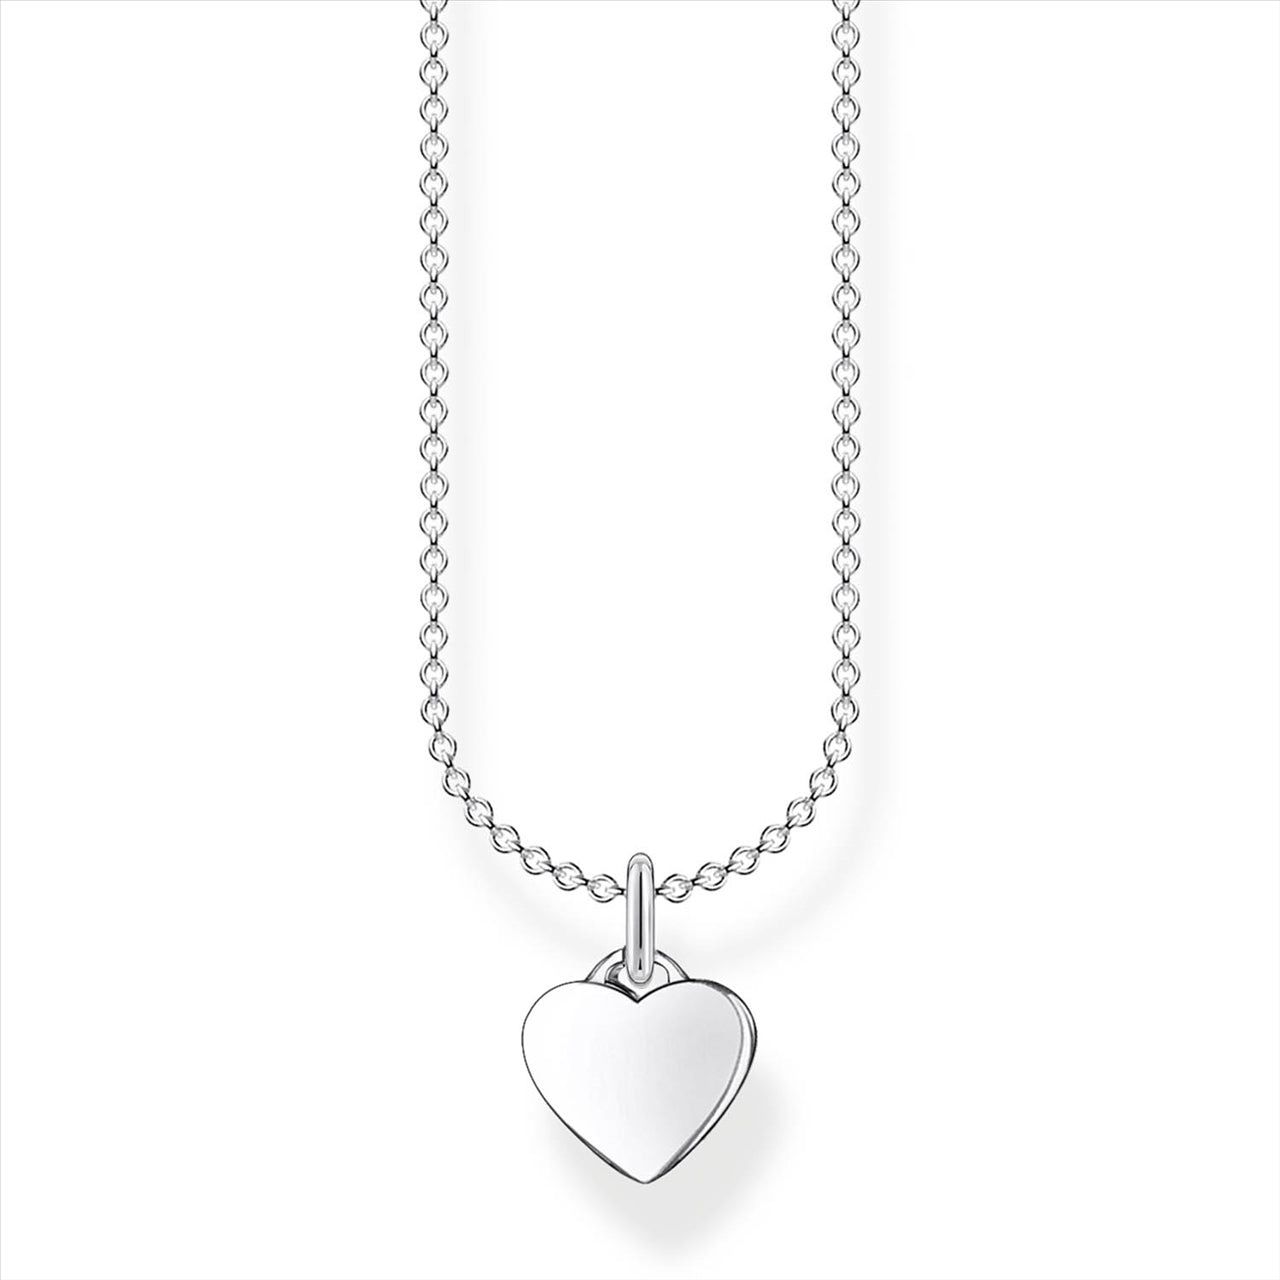 Thomas Sabo Small Flat Heart necklace.